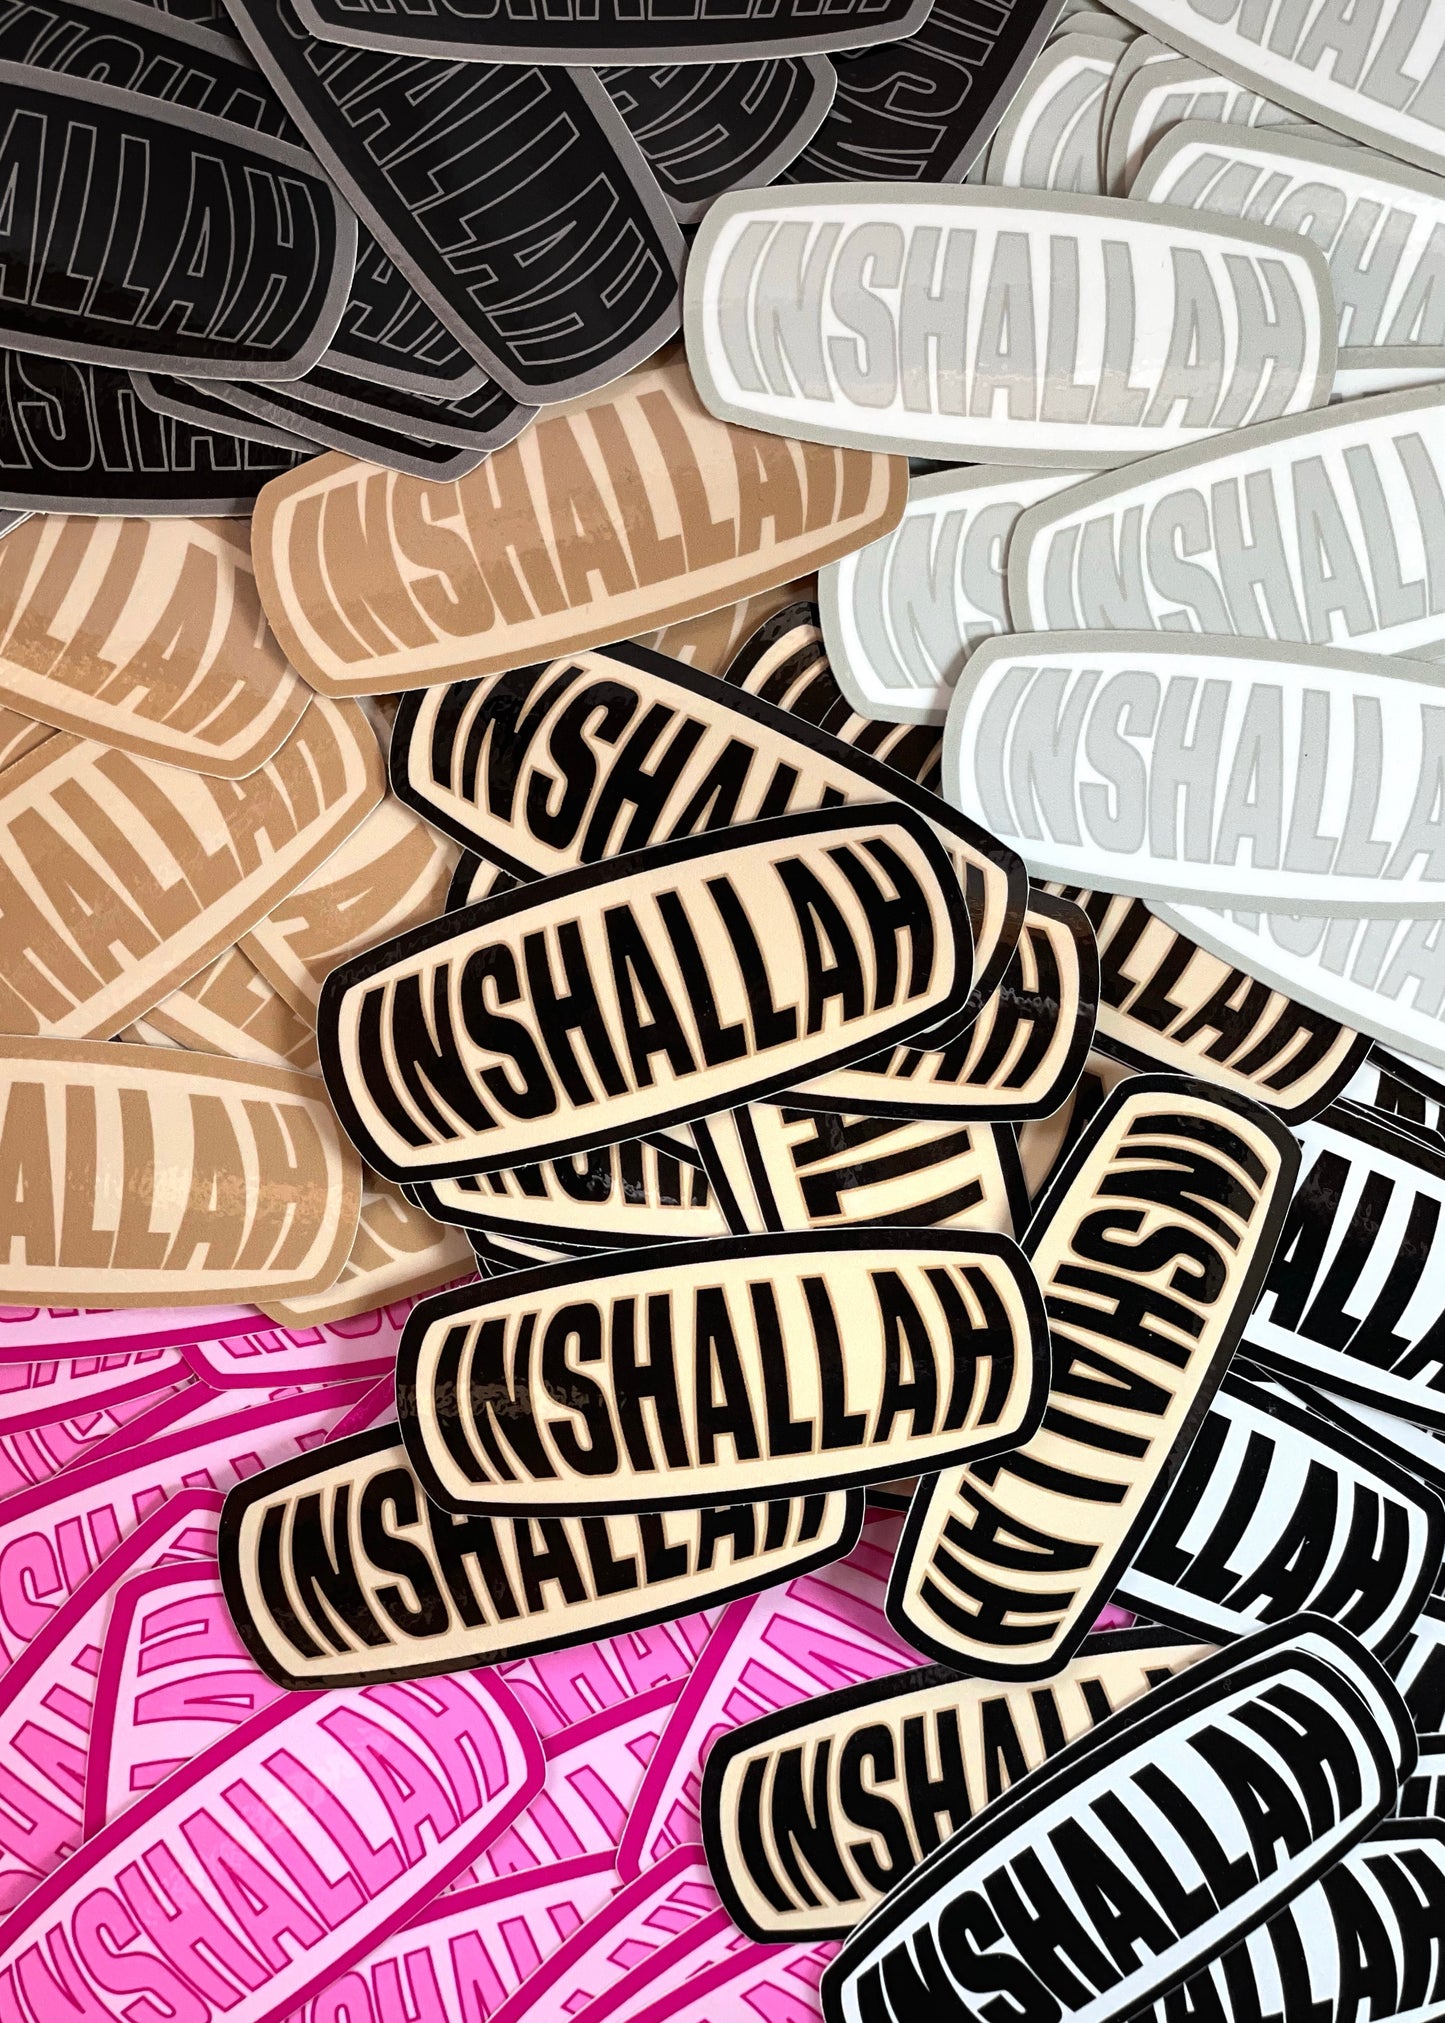 Inshallah Vinyl Stickers